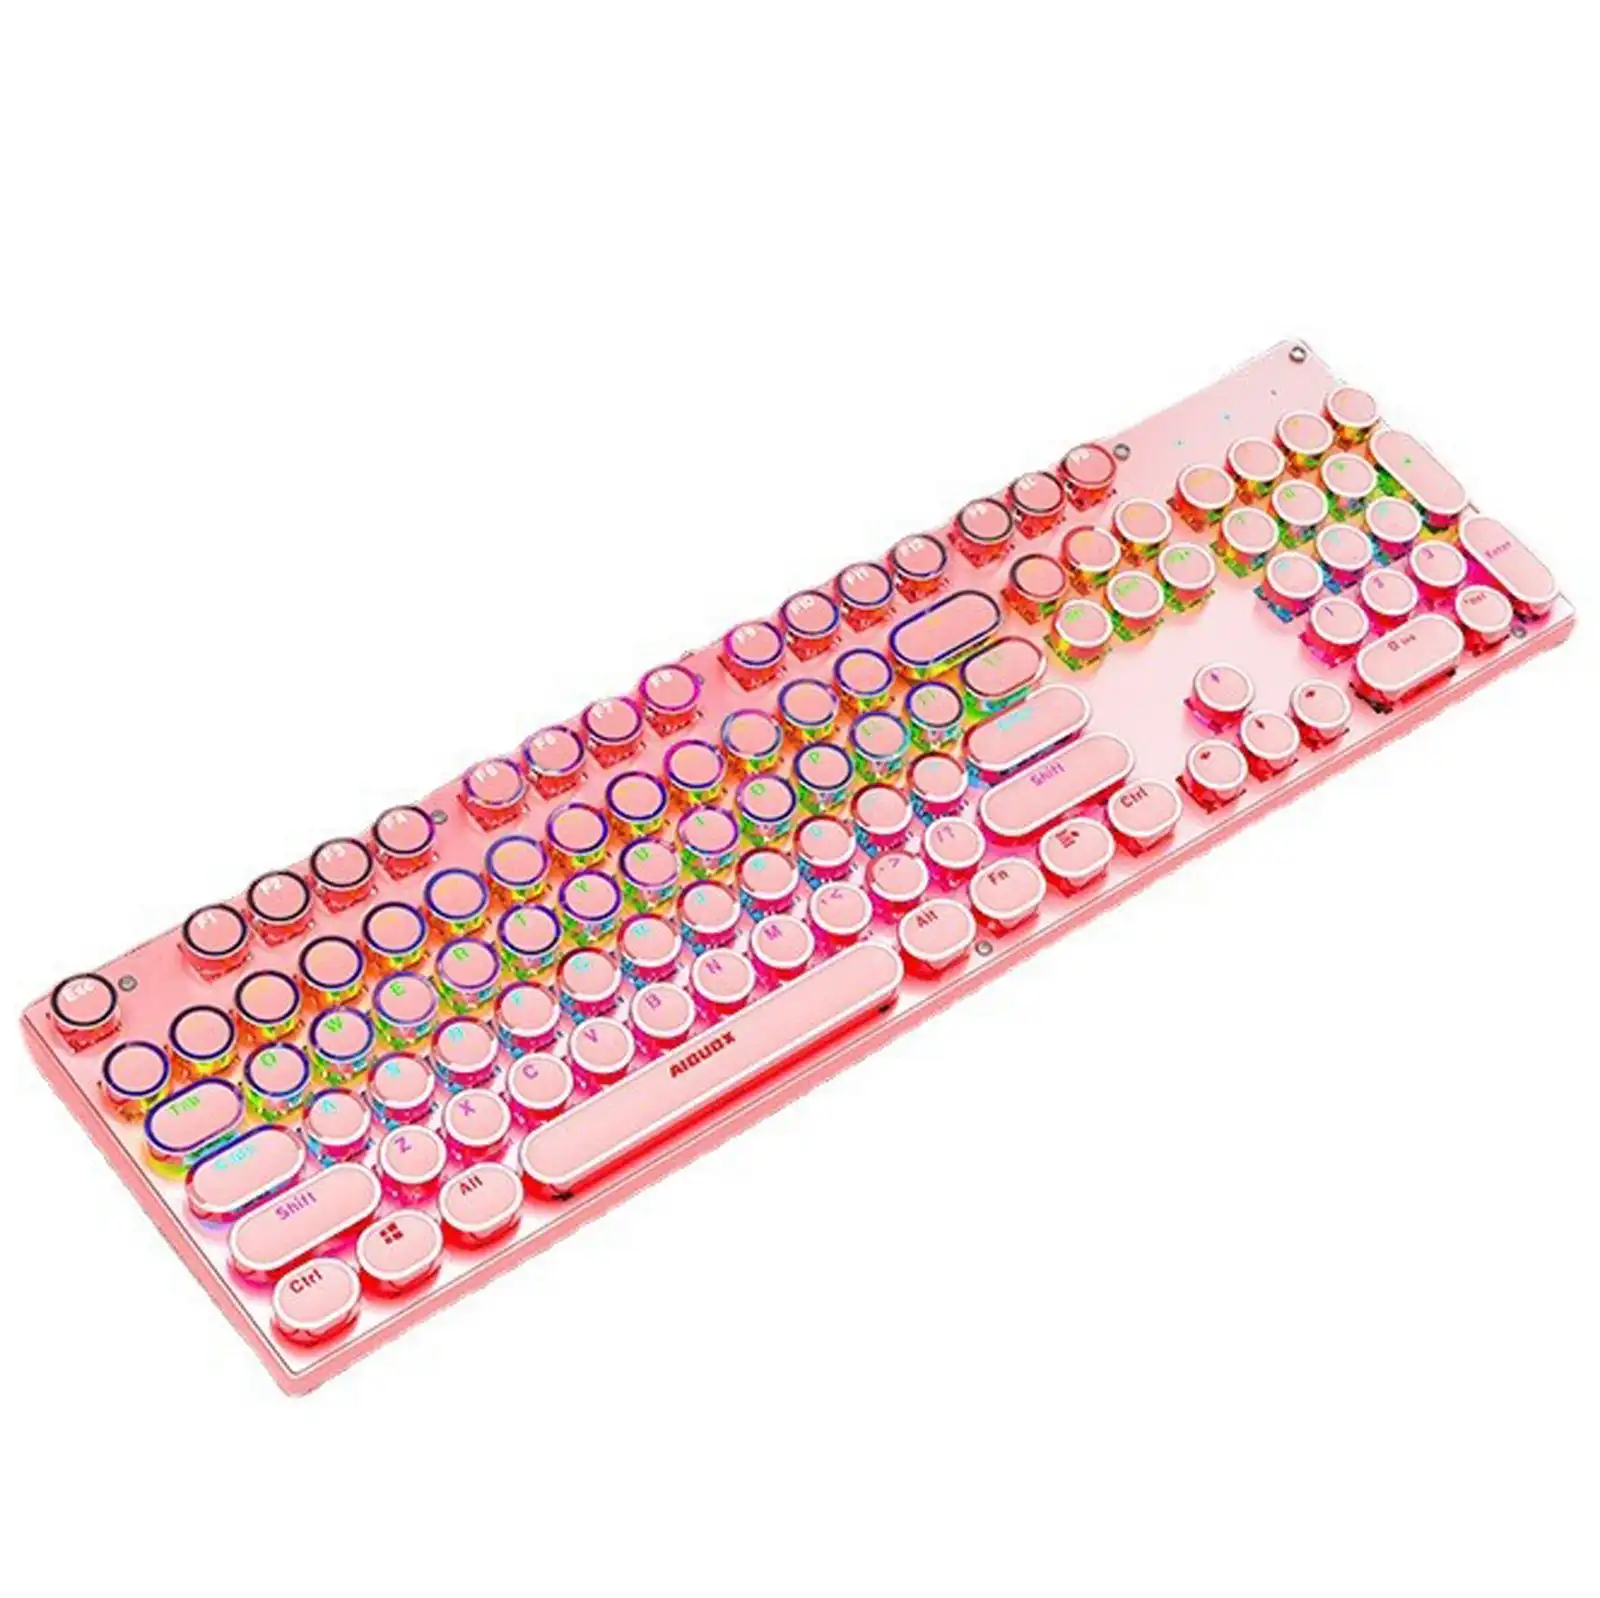 TODO Mechanical Gaming Keyboard RGB LED Linear Blue Switch USB Windows - Pink